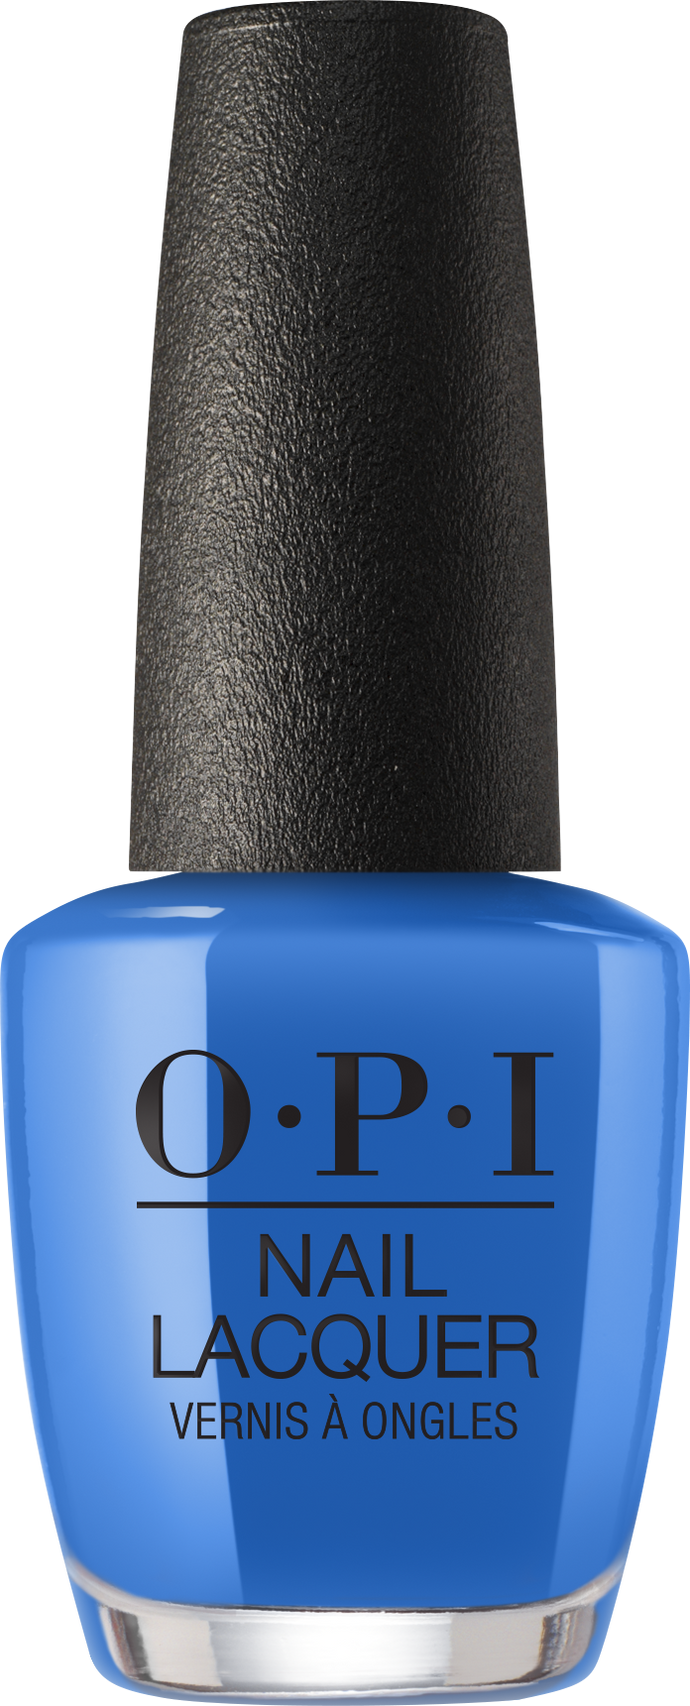 OPI OPI Nail Lacquer - Tile Art to Warm Your Heart 0.5 oz - #NLL25 - Sleek Nail